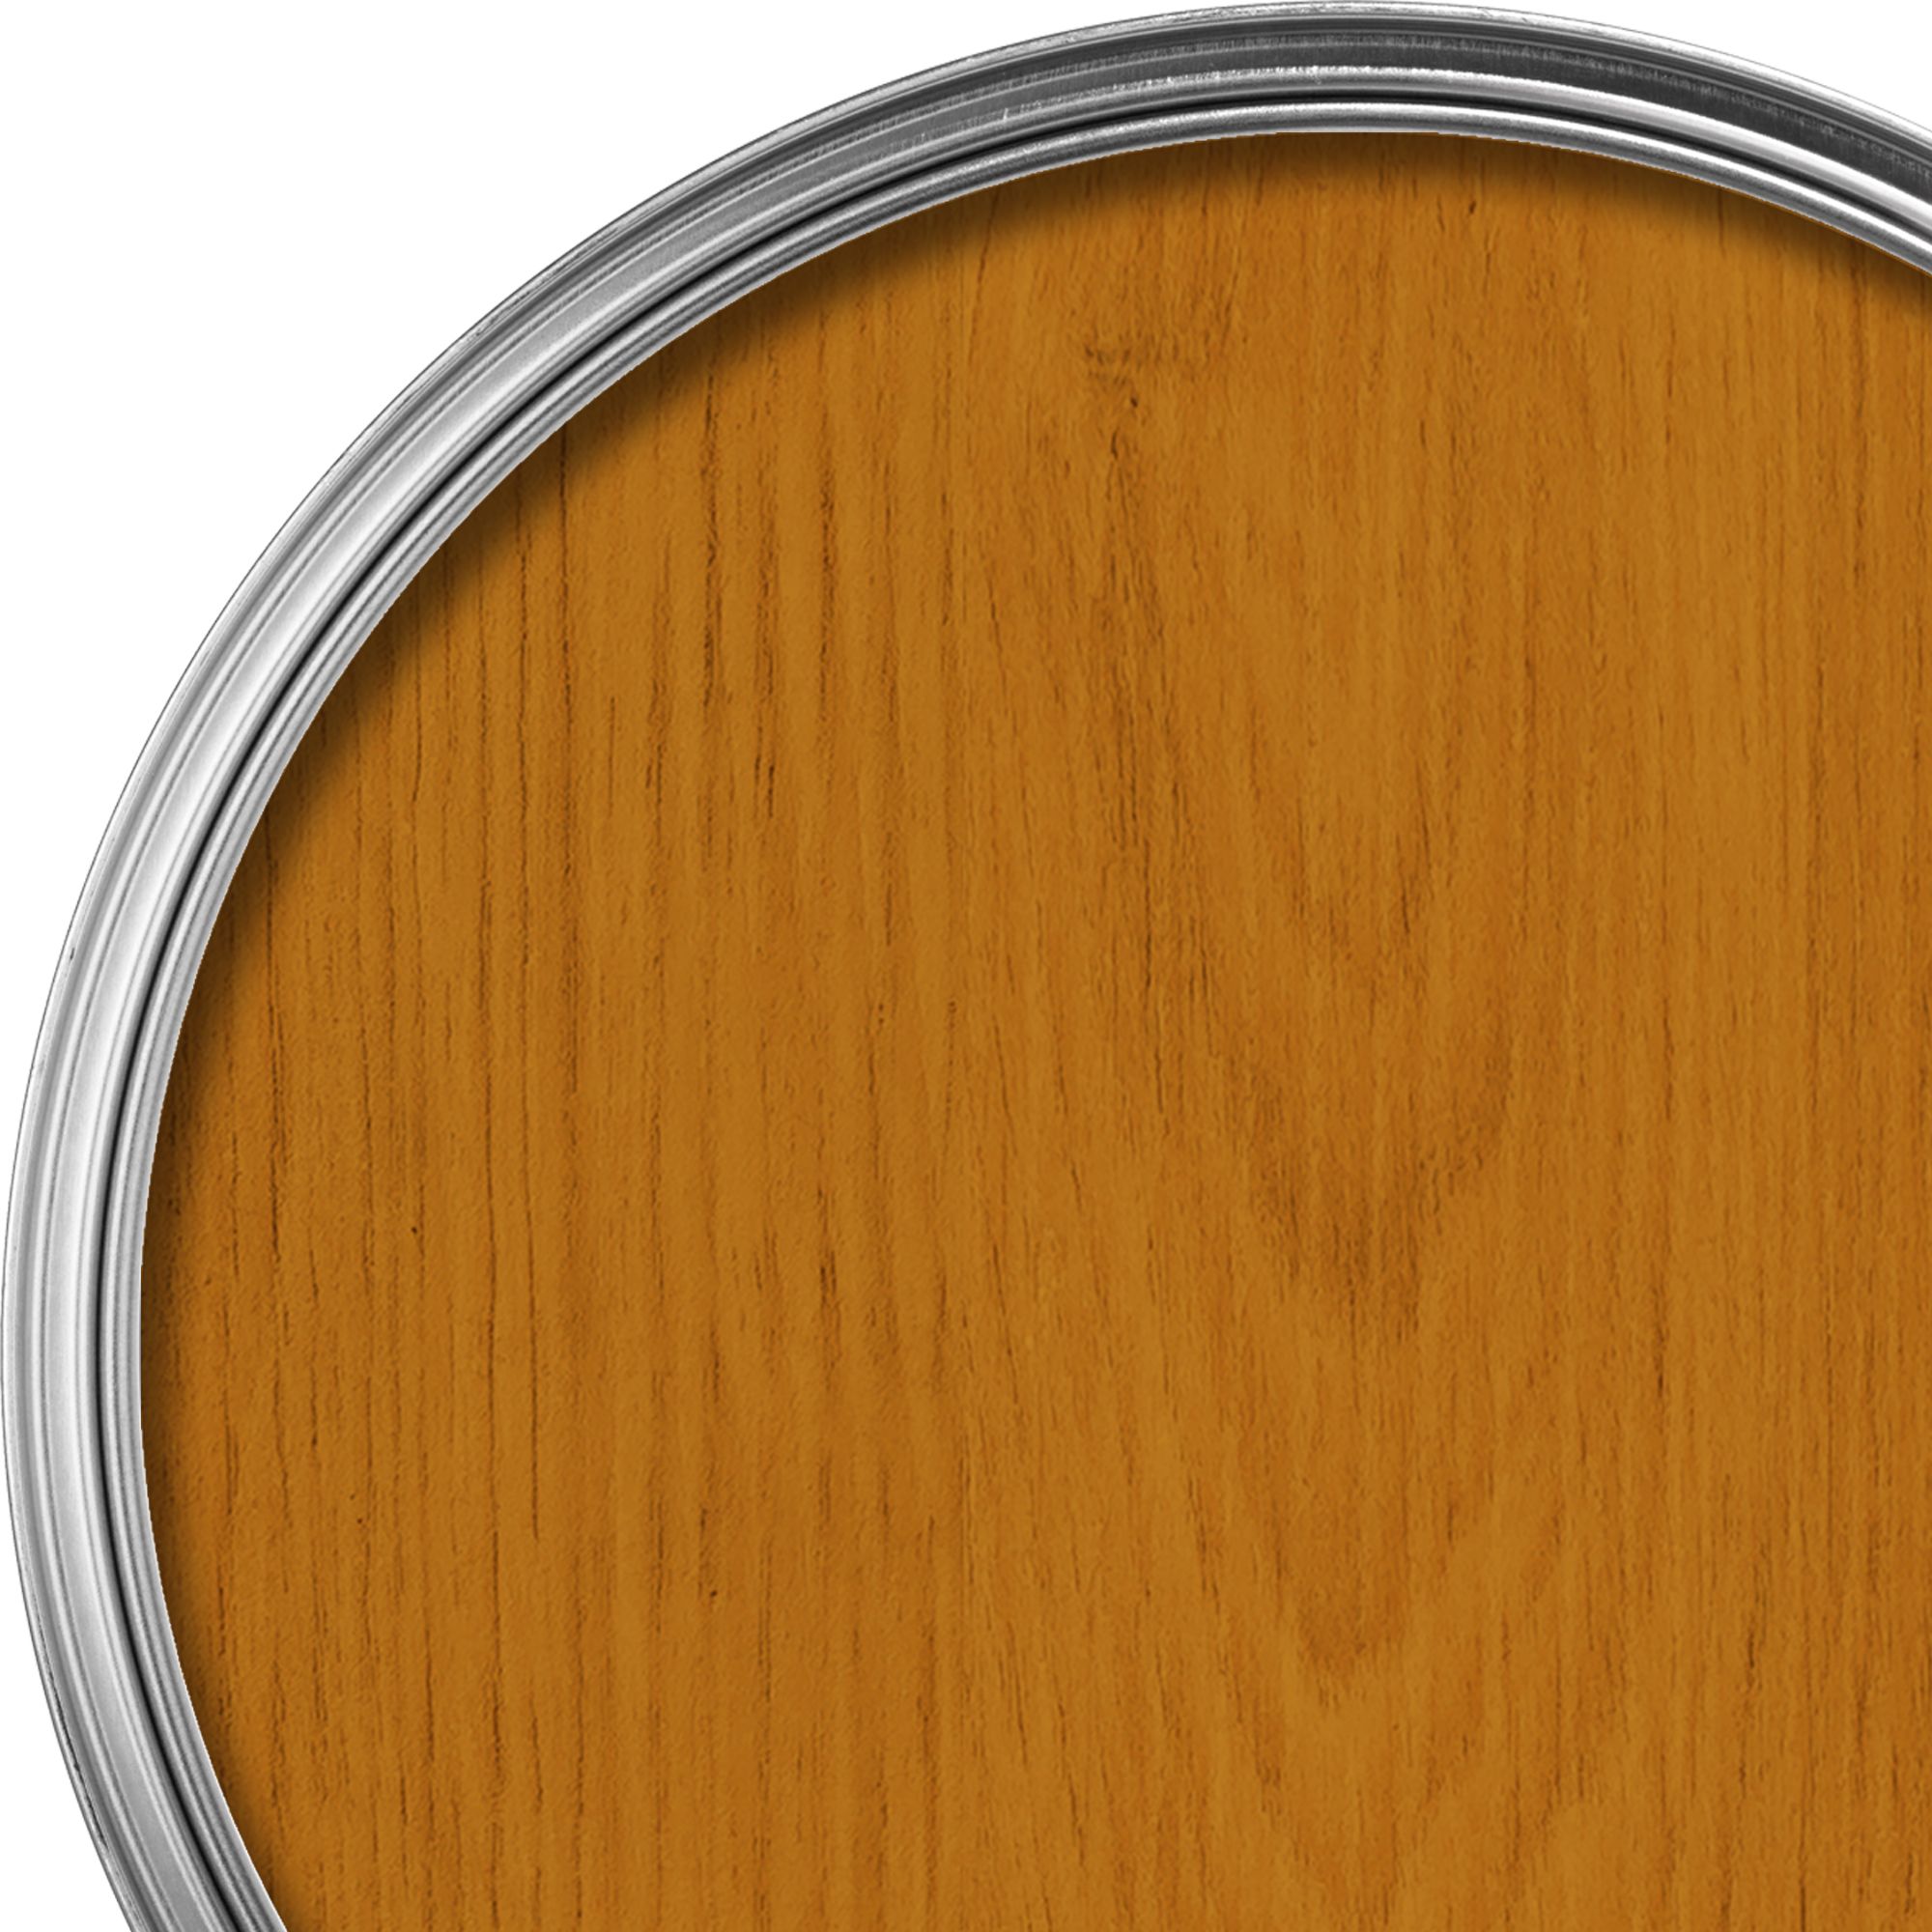 GoodHome Medium Oak Satin Multi-surface Furniture Wood varnish, 250ml